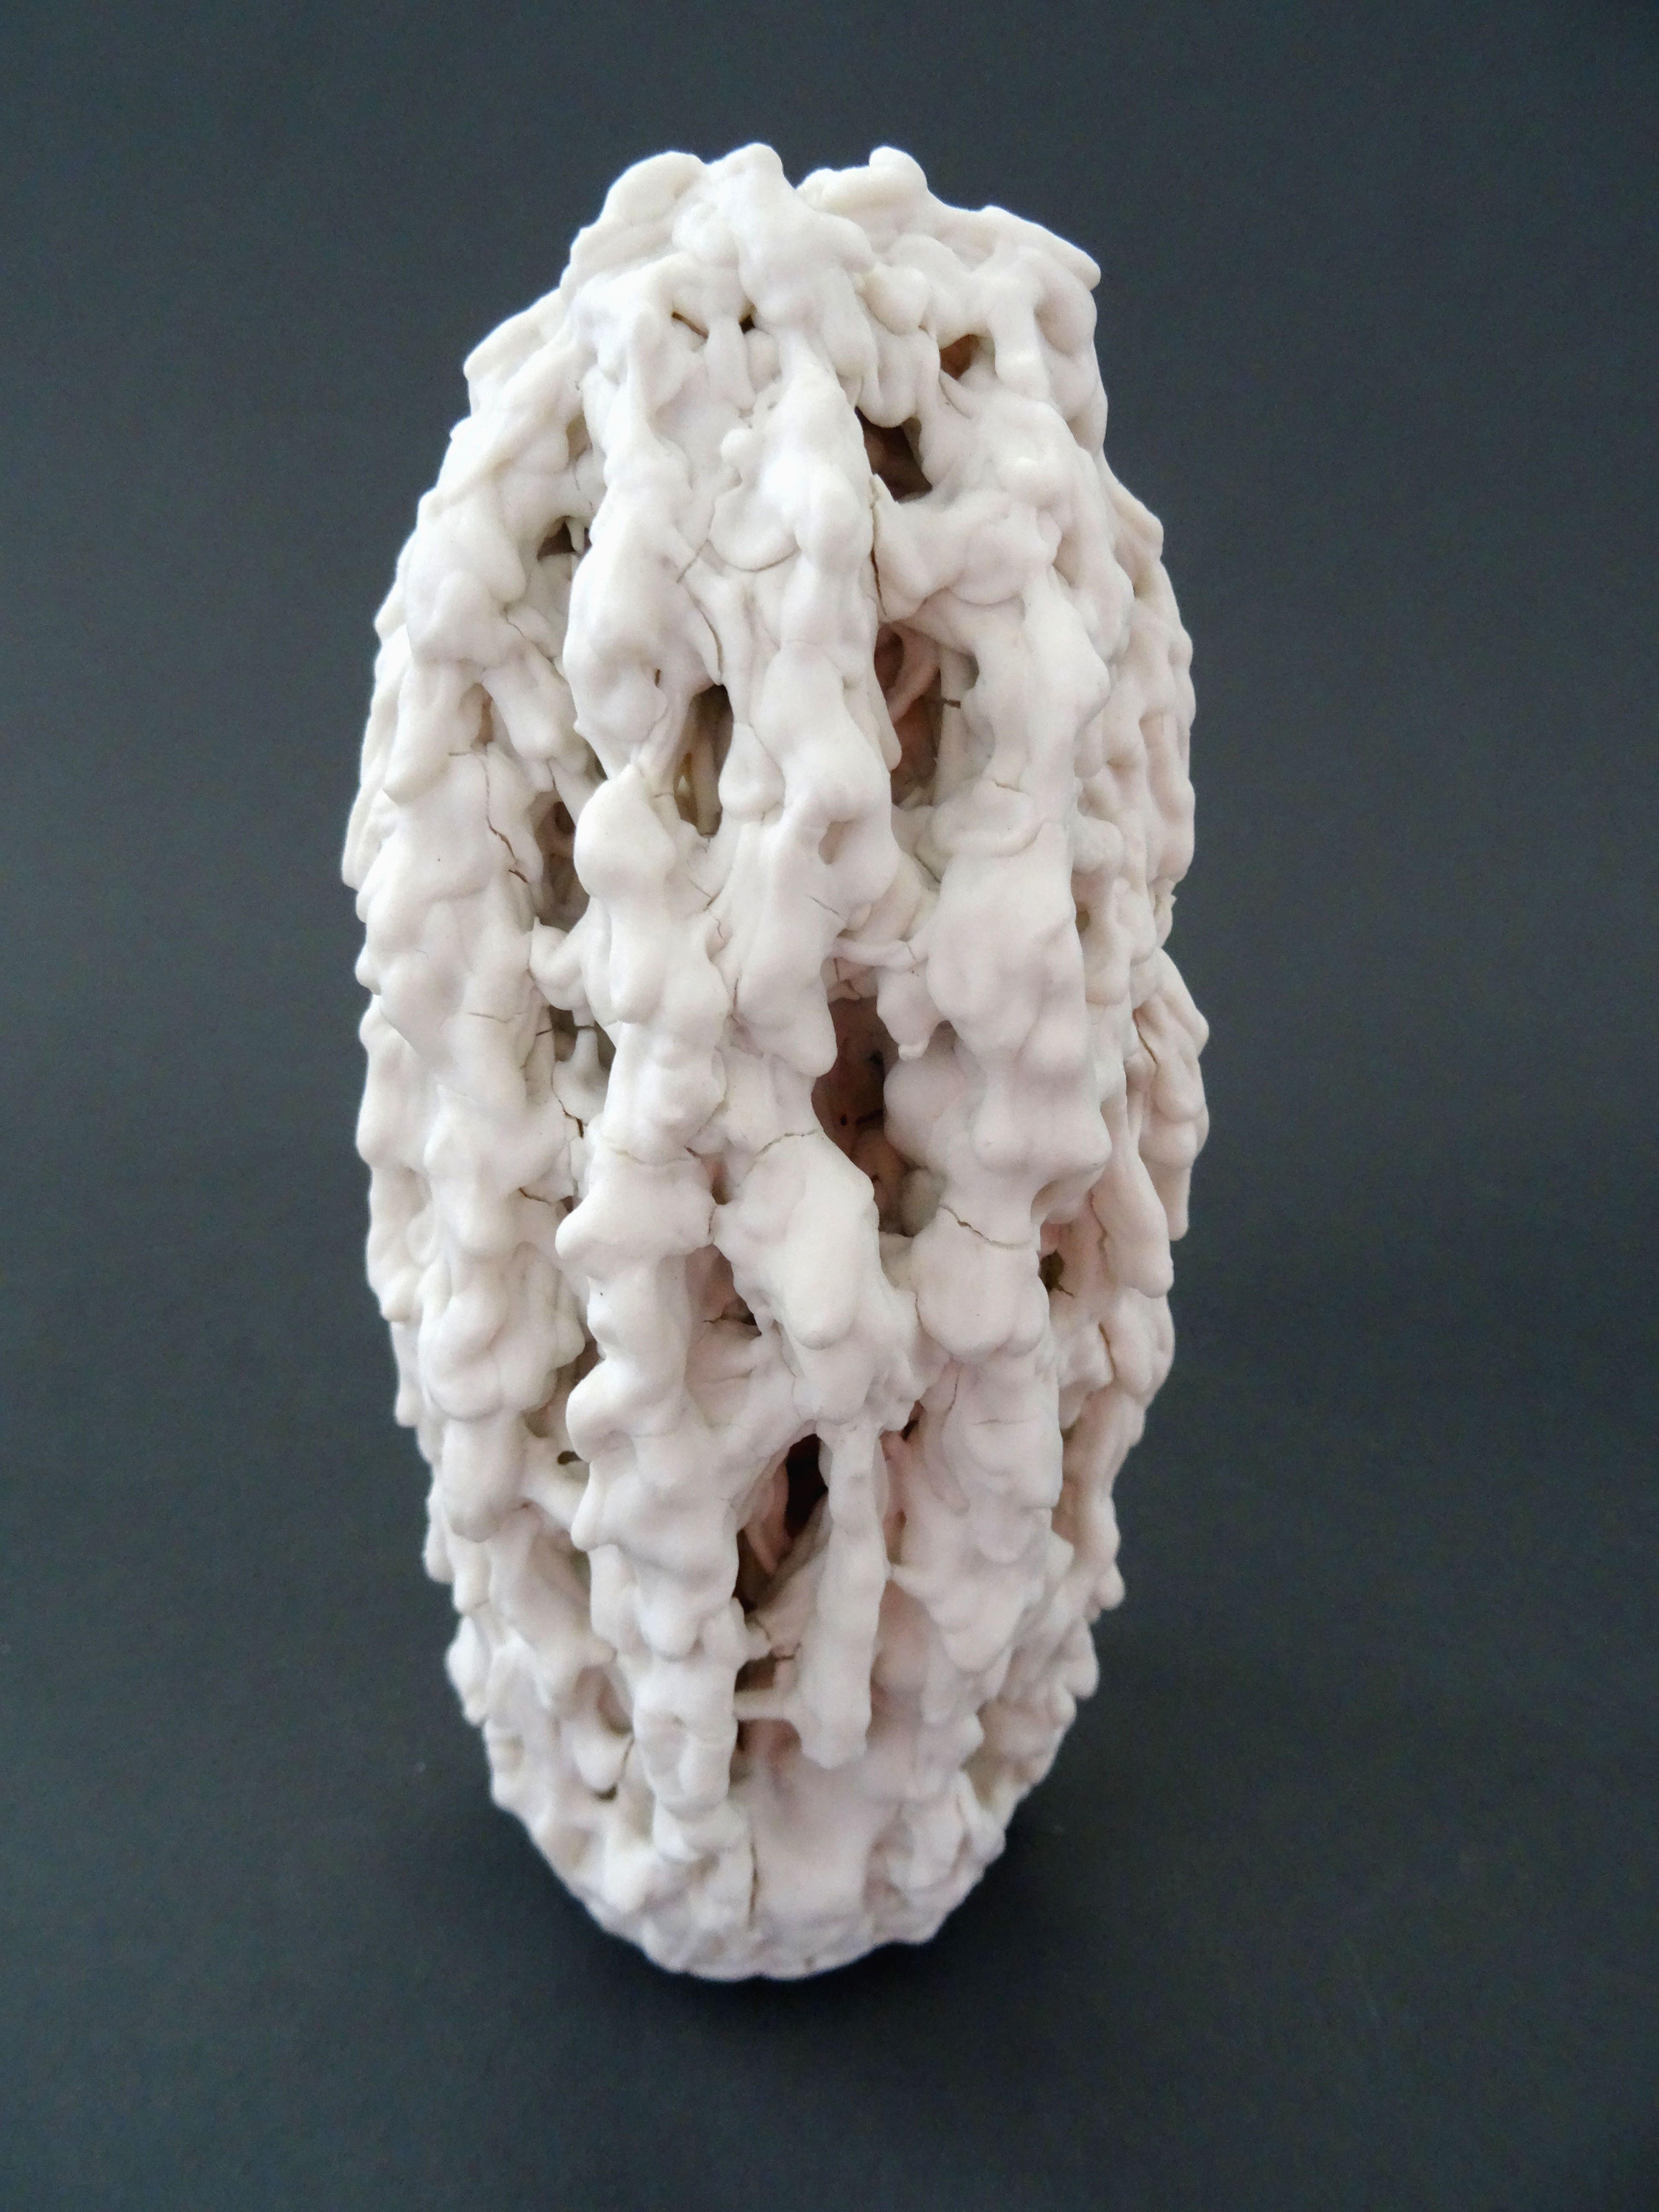 Elina Titane  Abstract Sculpture - Drop. Porcelain, h 16 cm